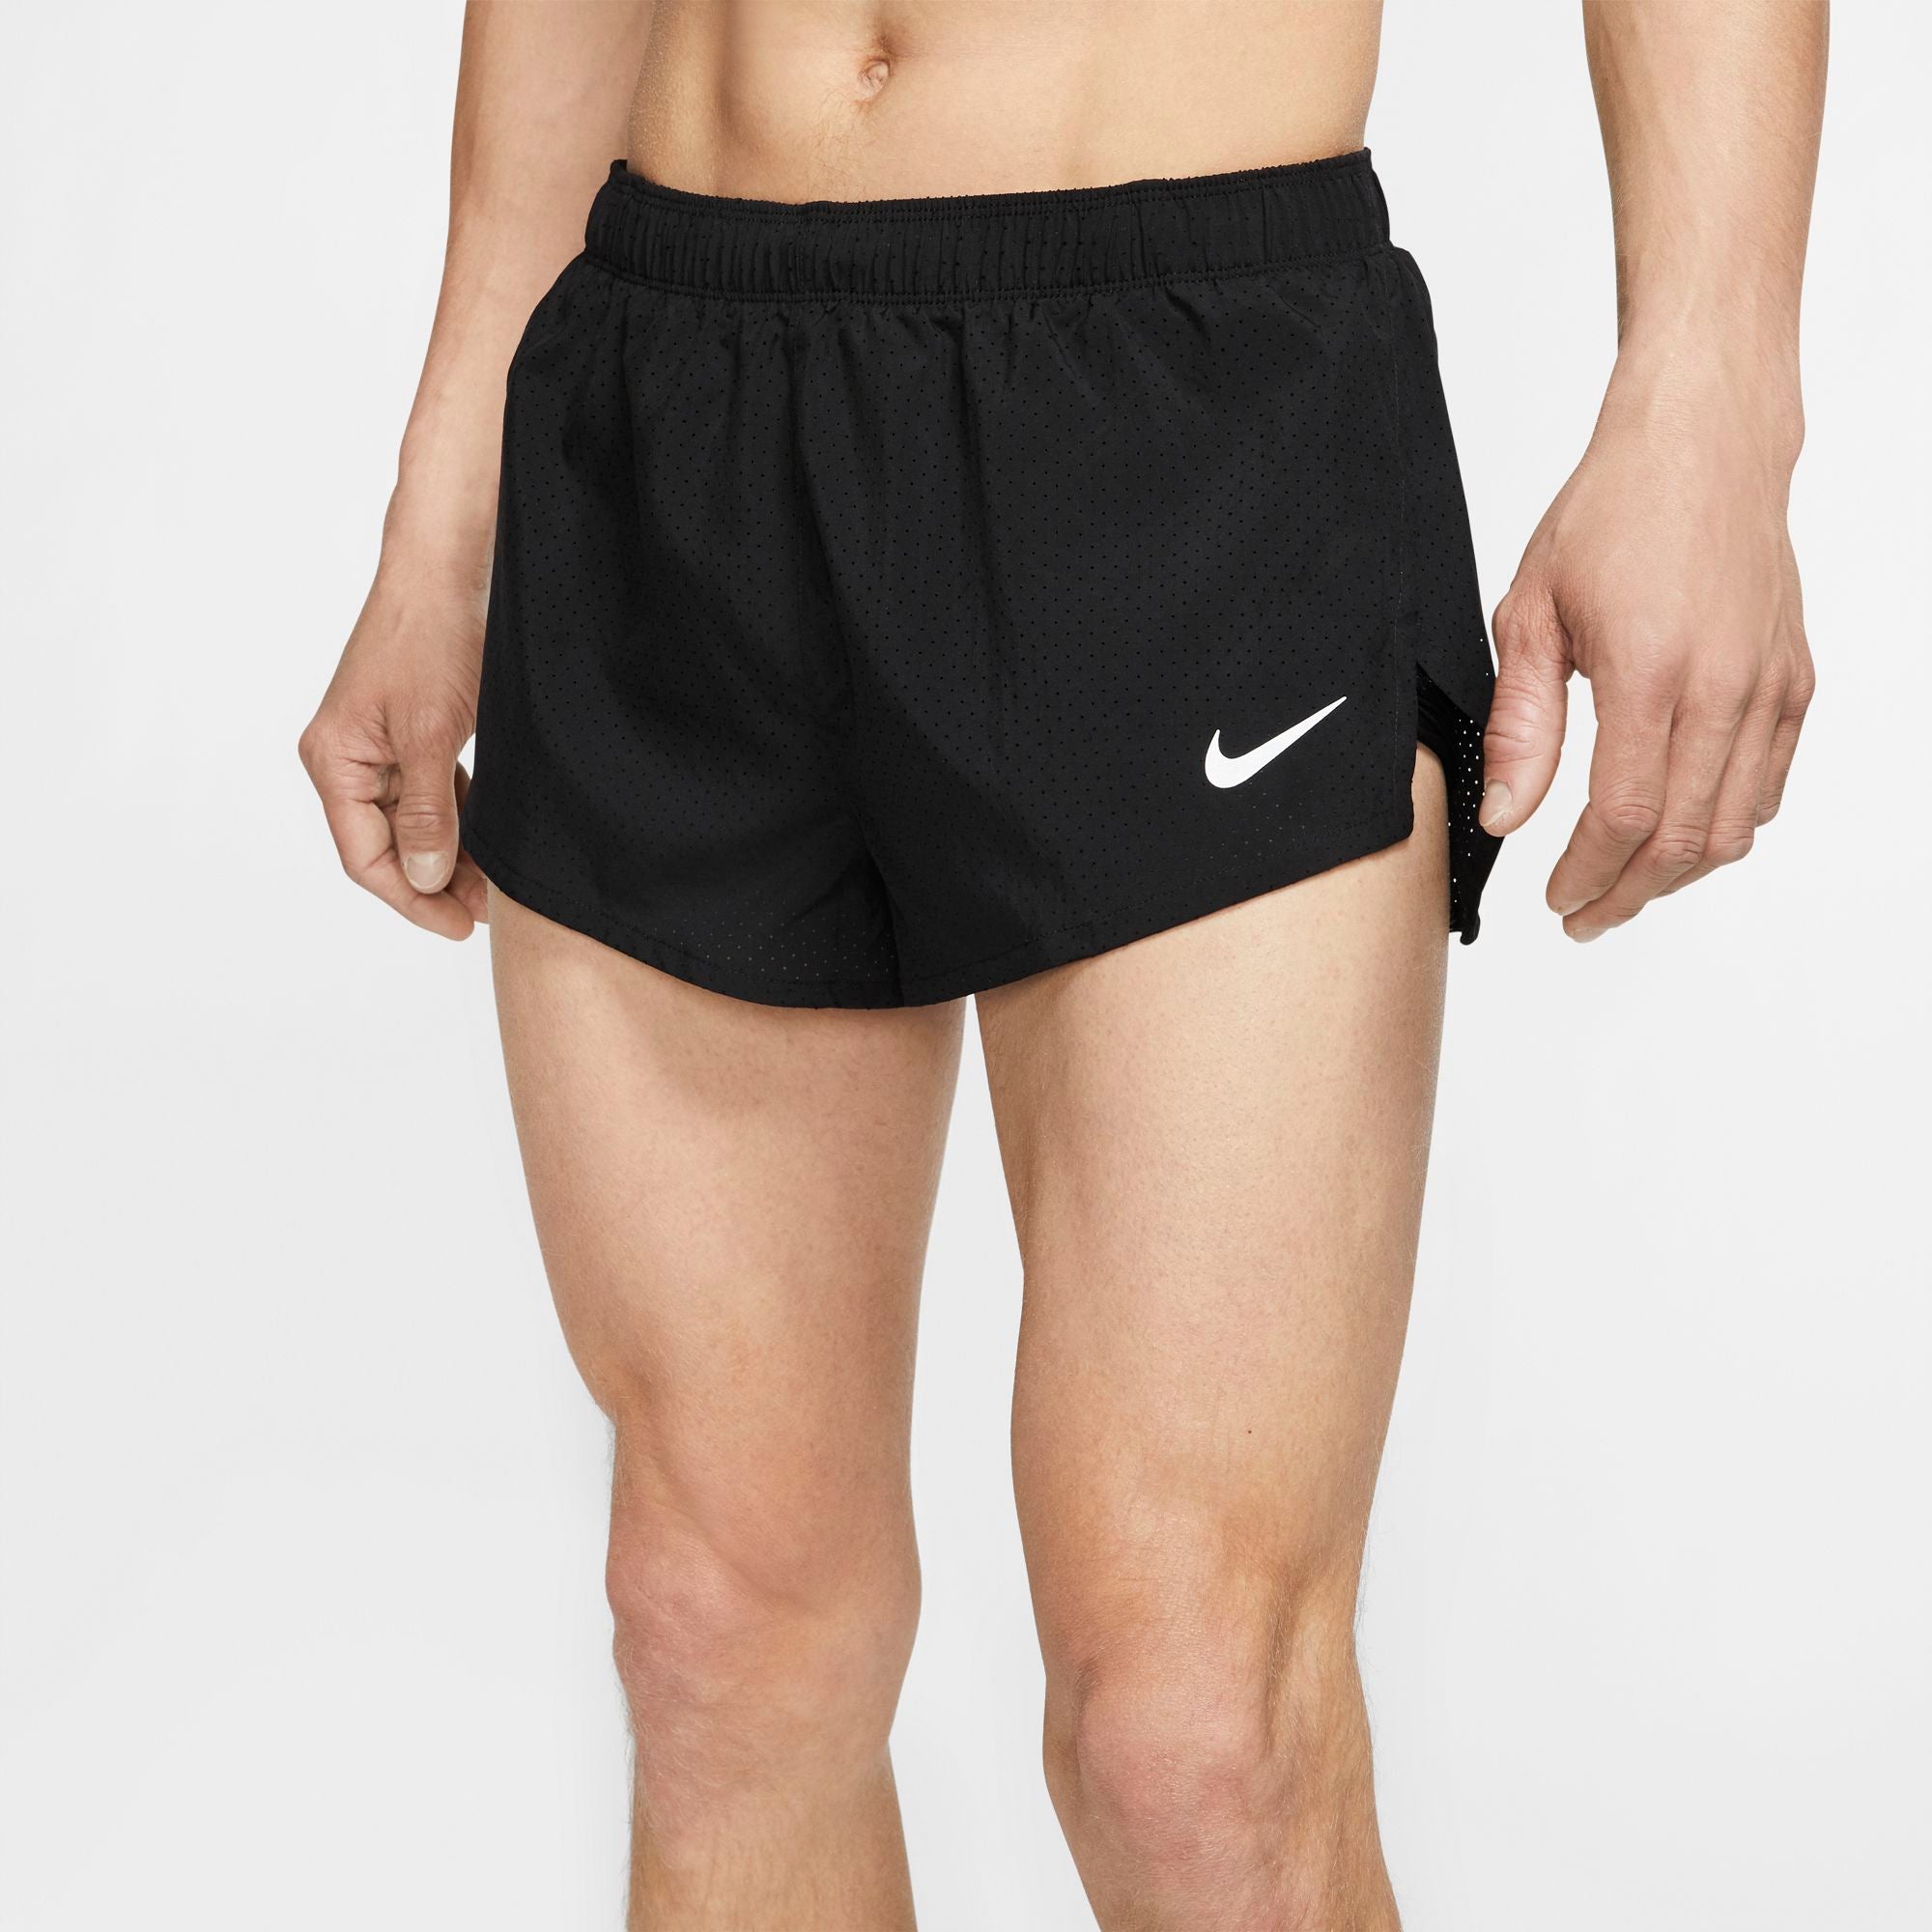 nike fast 2 inch running shorts